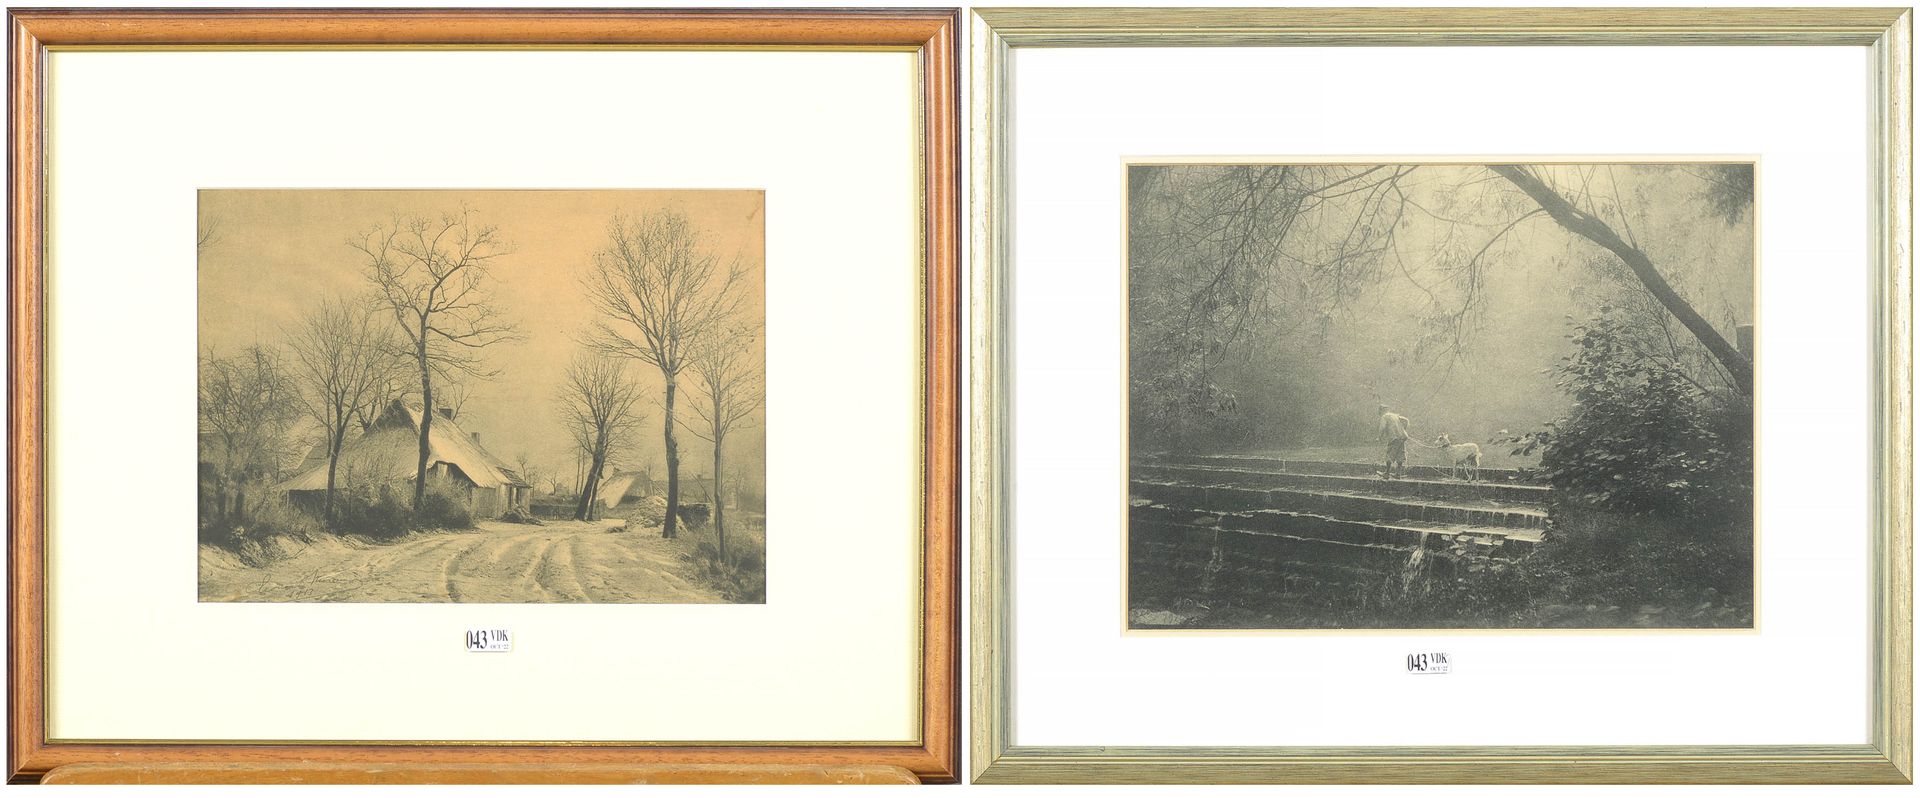 MISONNE Léonard (1870 - 1943) Two photographs in mediobrome print "Hiver en Camp&hellip;